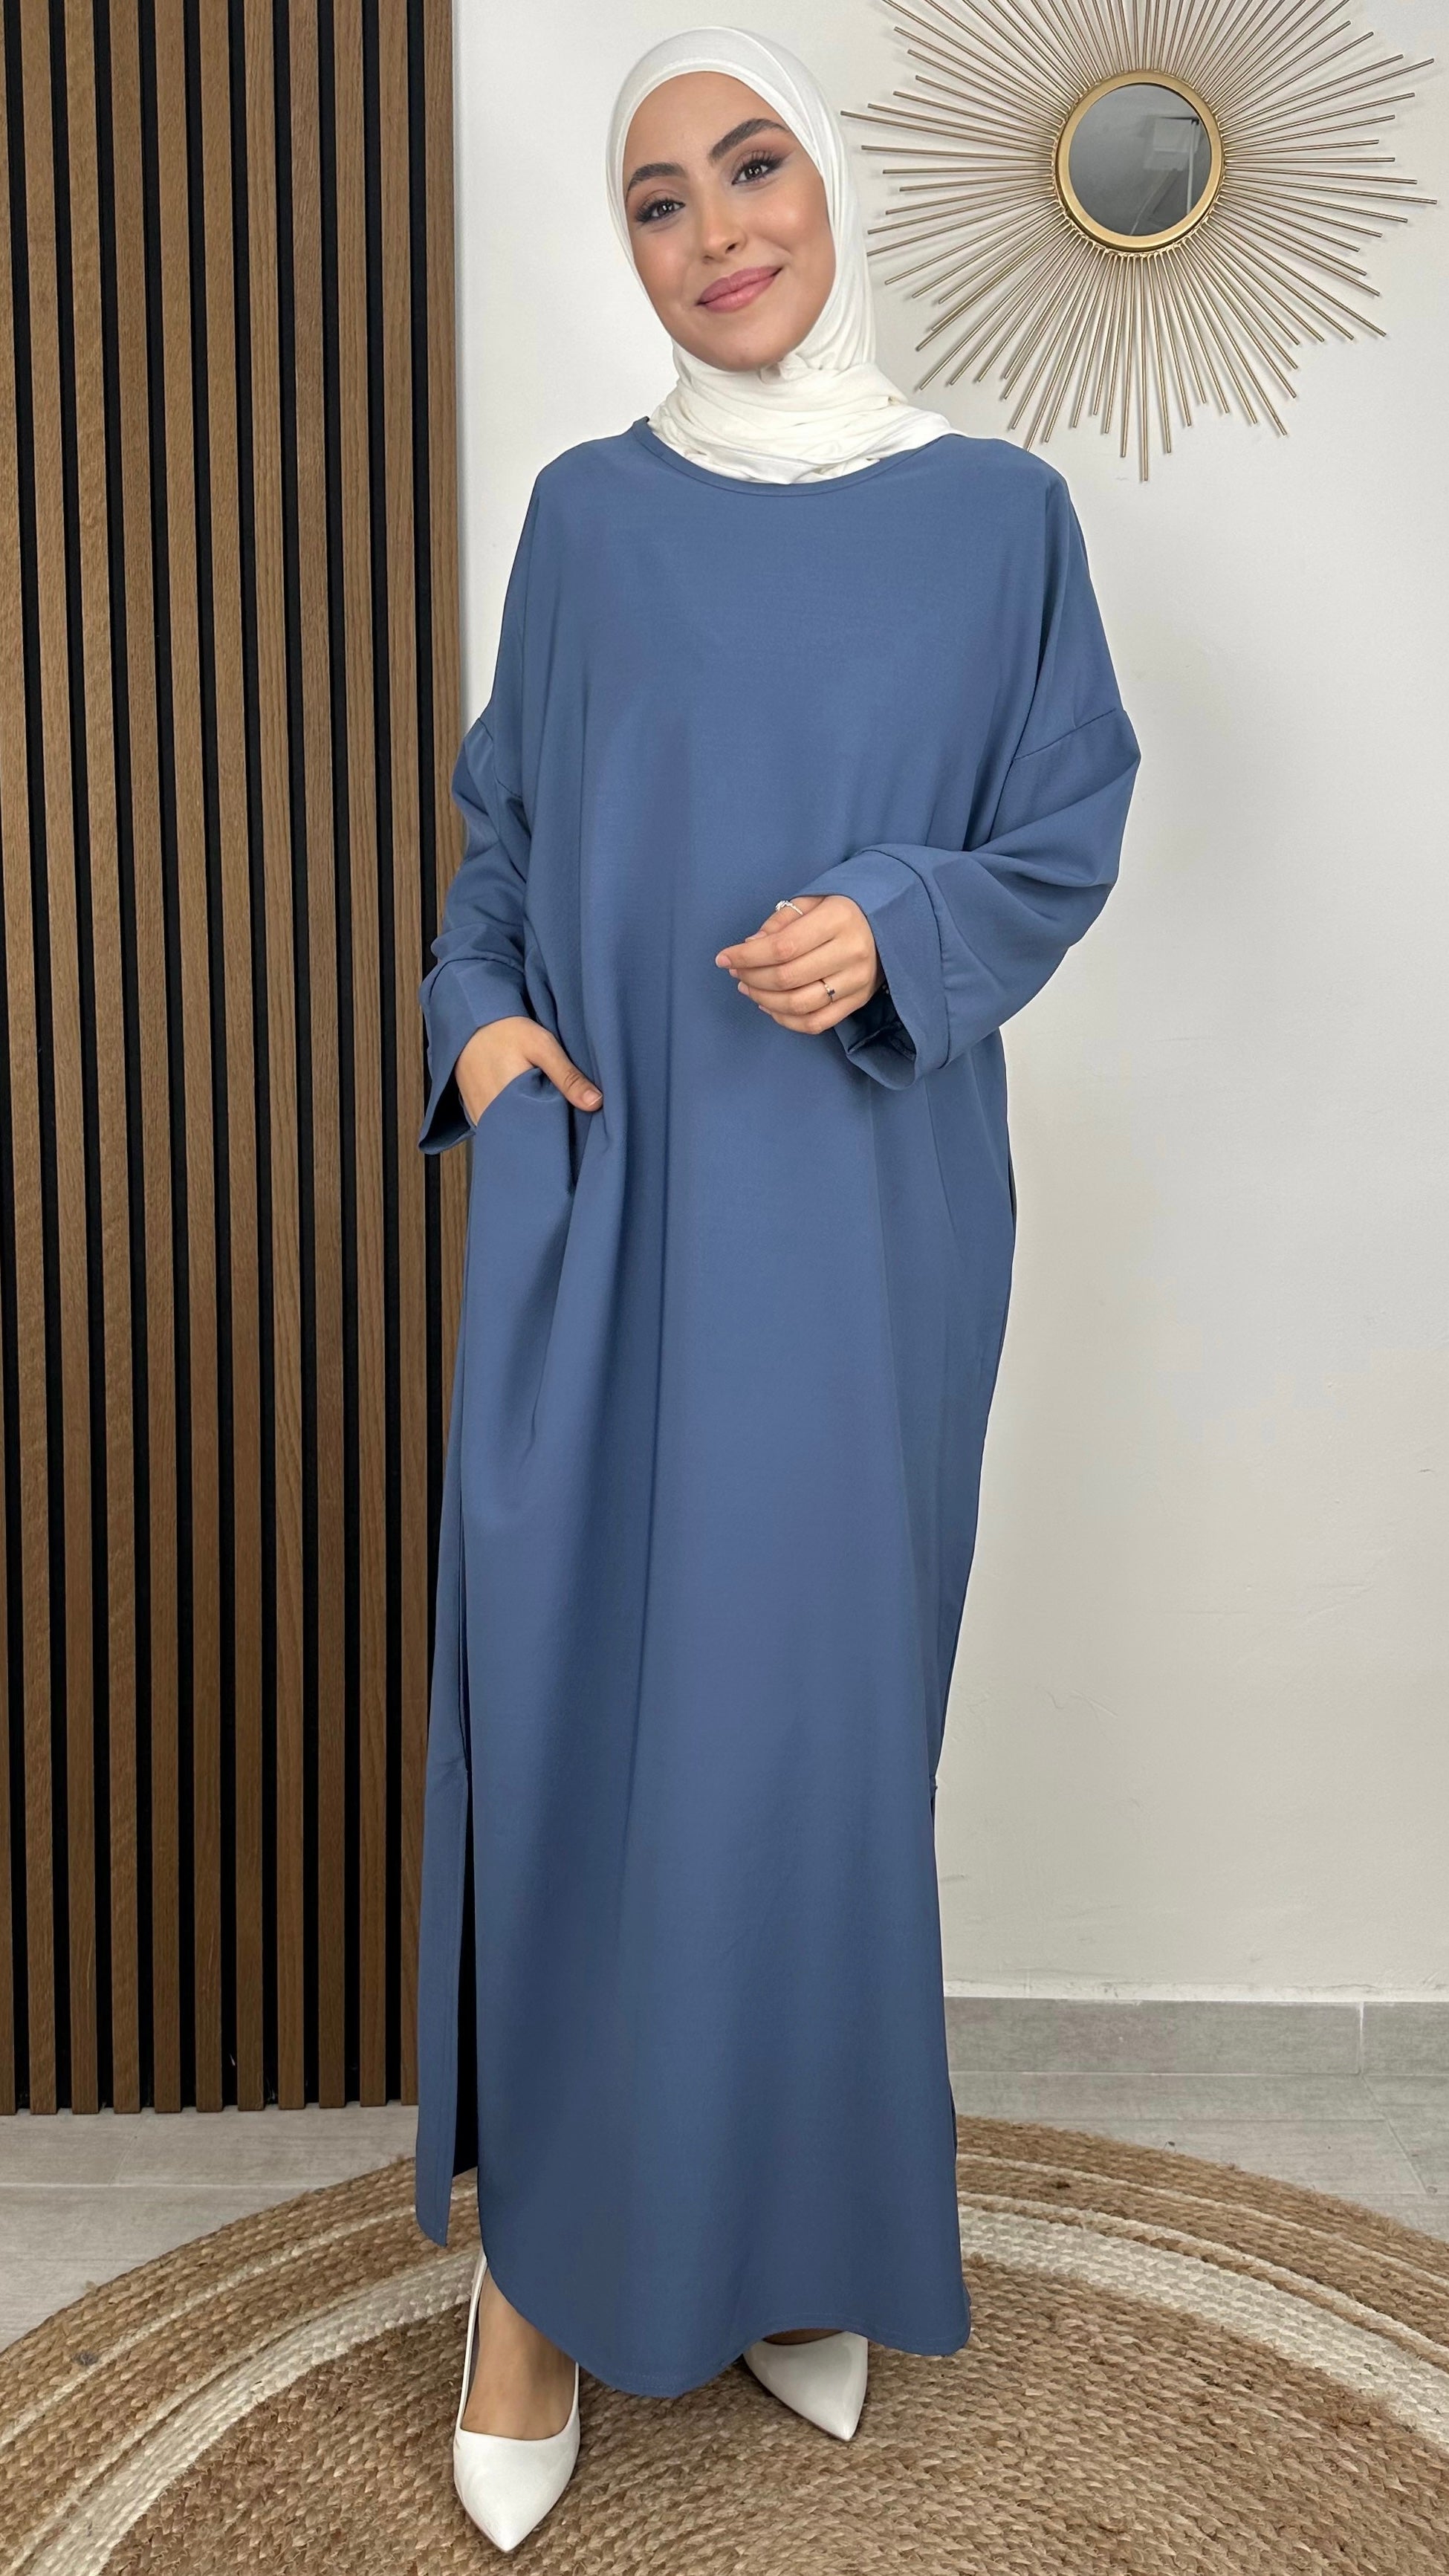 Abaya split  - abaya semplice - abaya con tasche - hijab  - abaya per pellegrinaggio - umra e hajj - leggero spacco laterale 